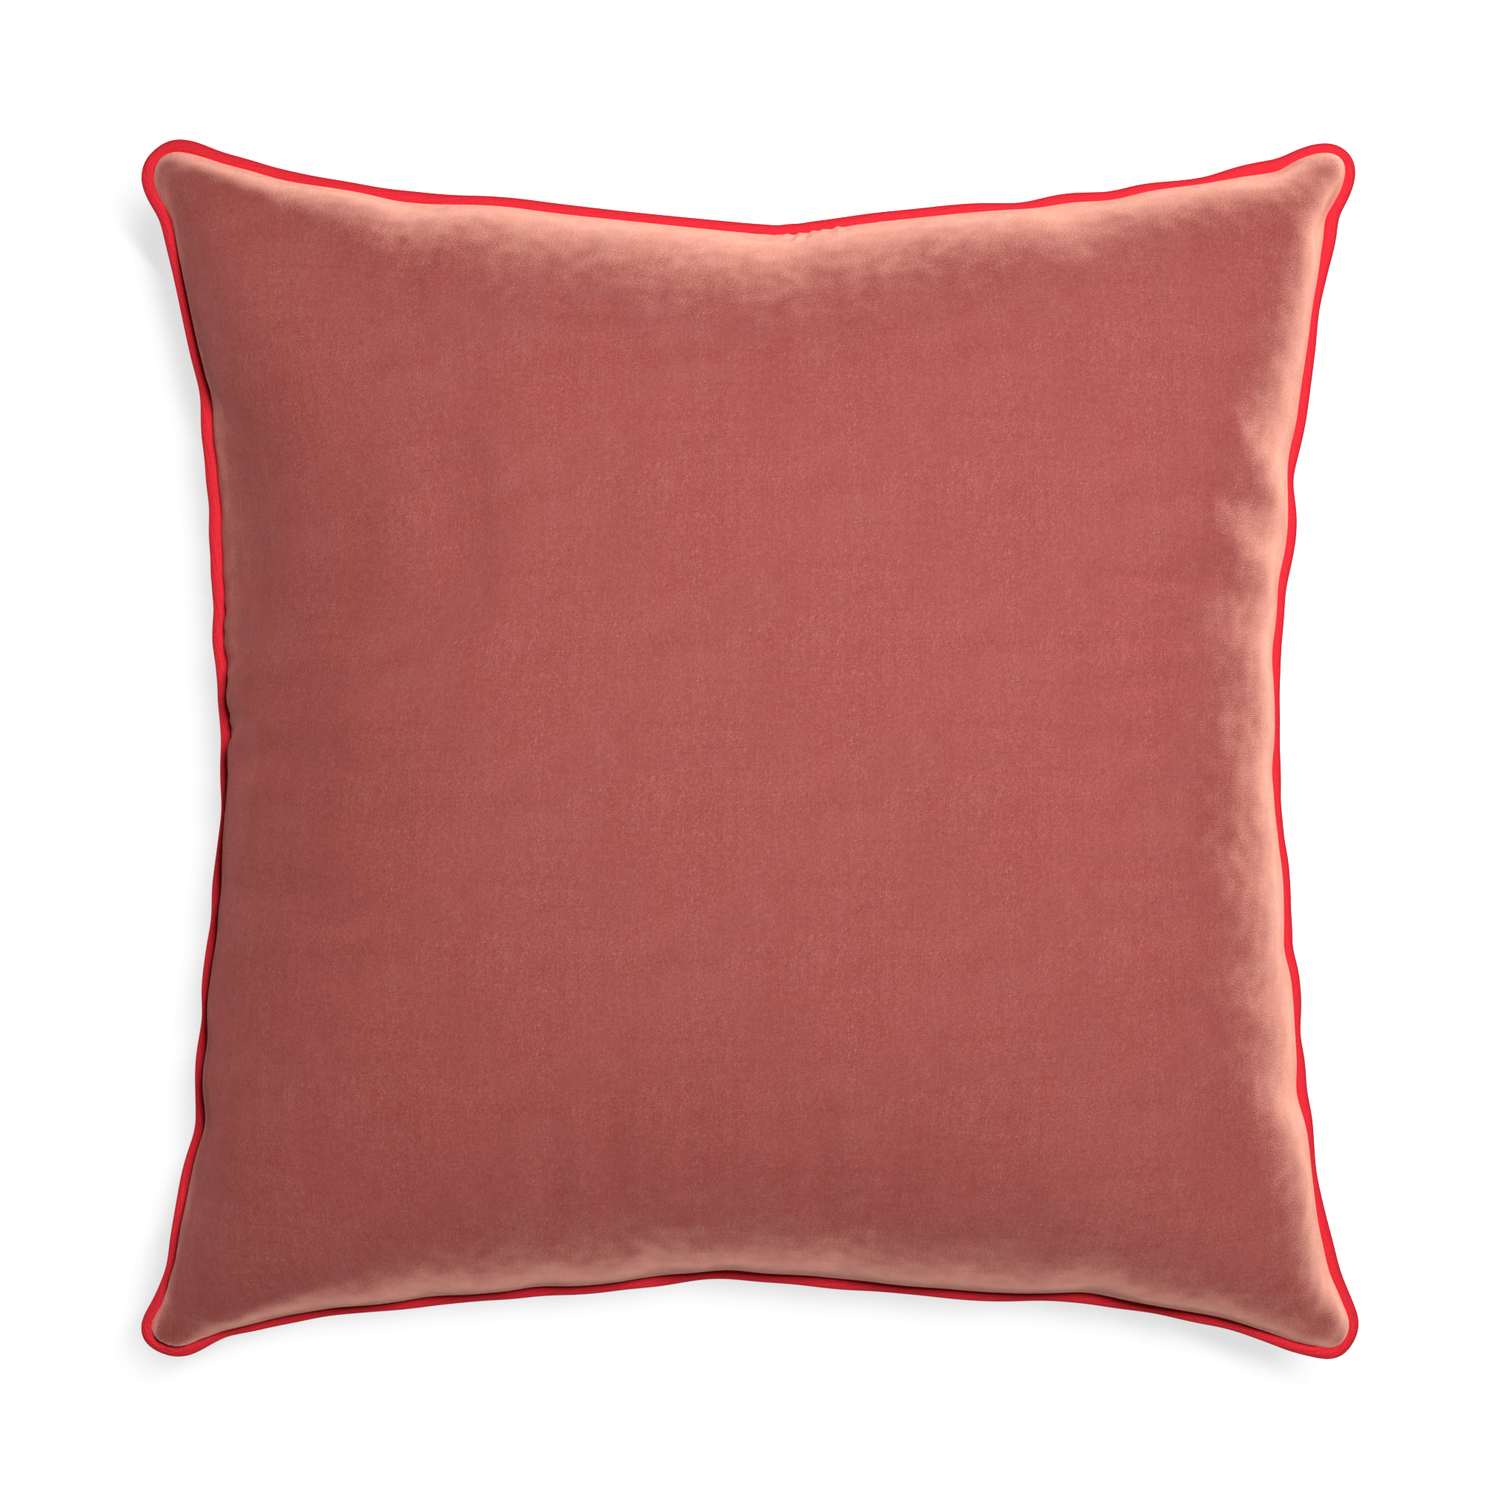 Euro-sham cosmo velvet custom pillow with cherry piping on white background